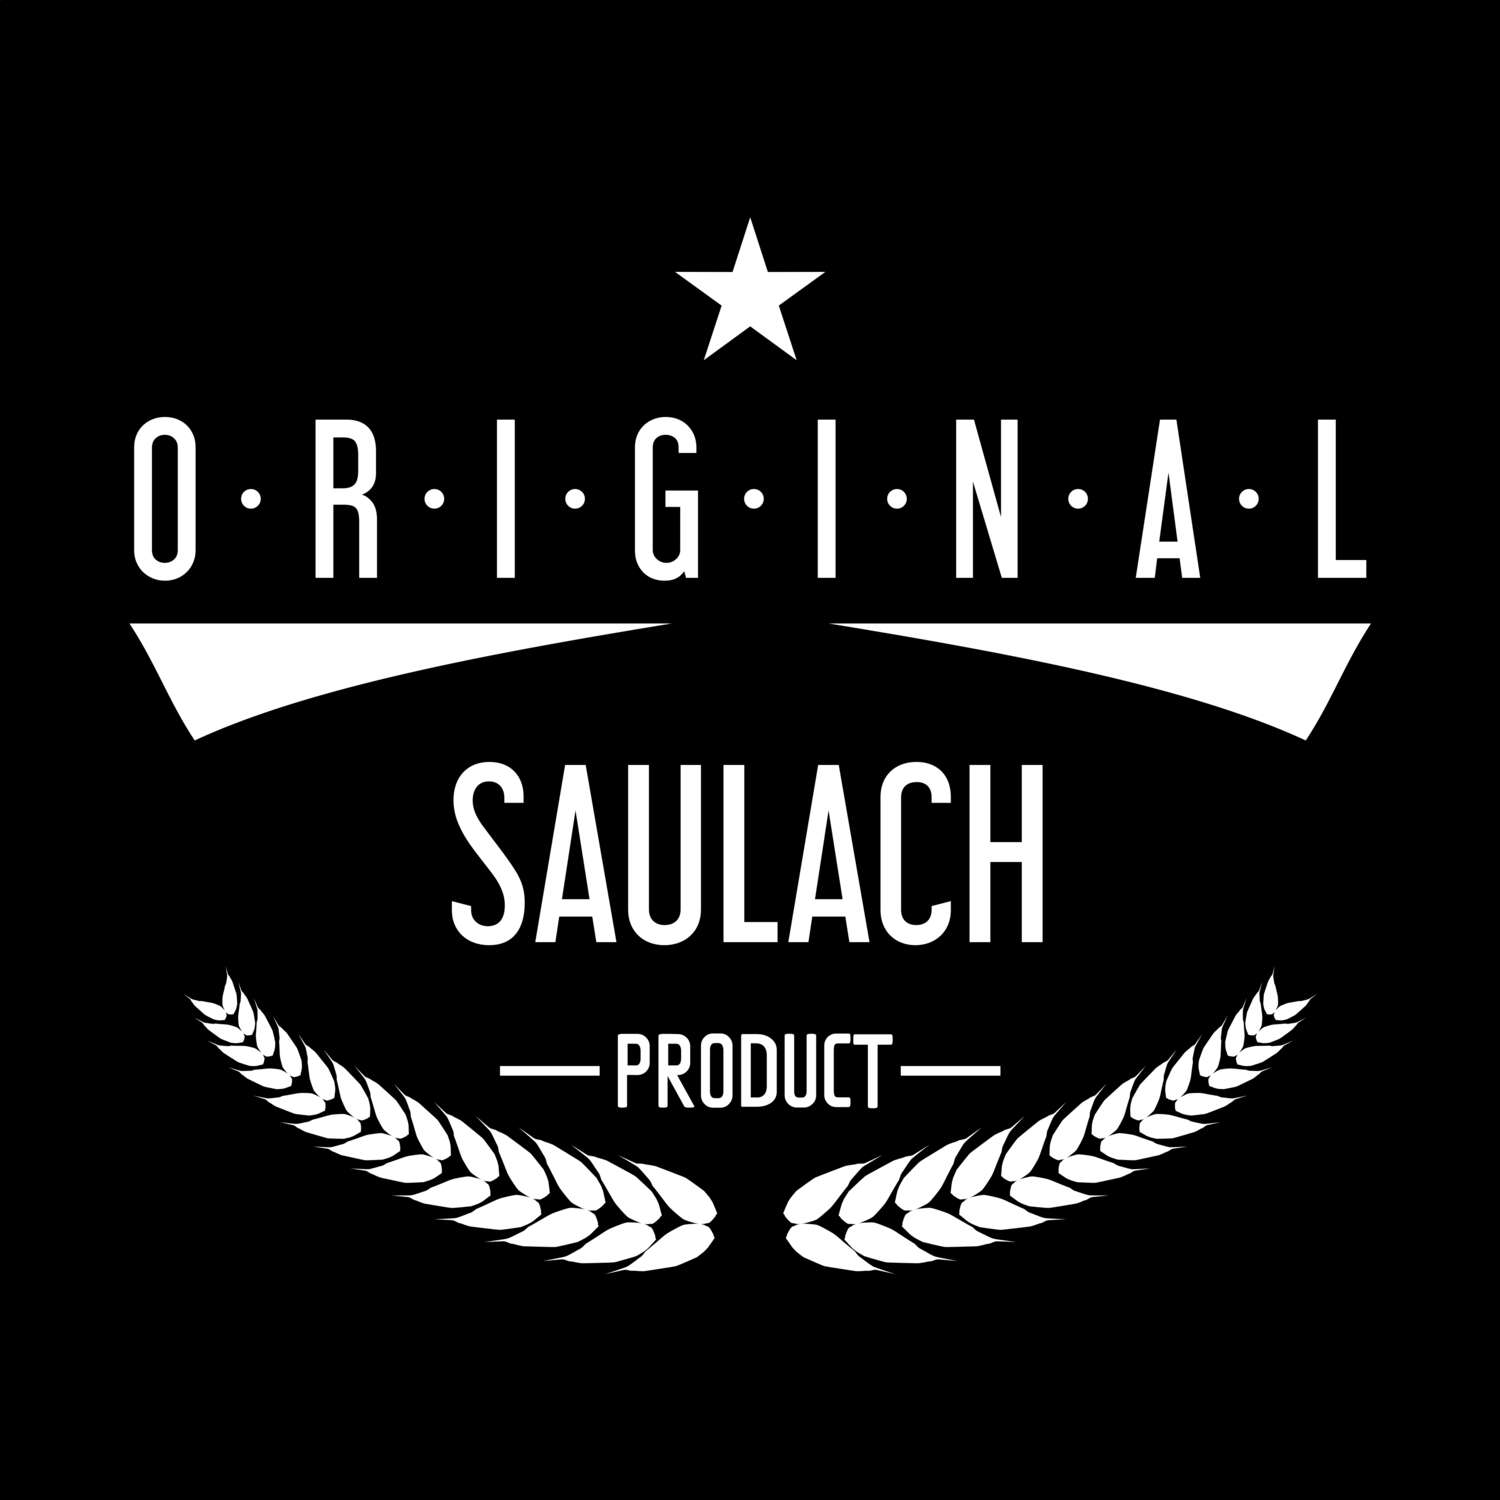 Saulach T-Shirt »Original Product«